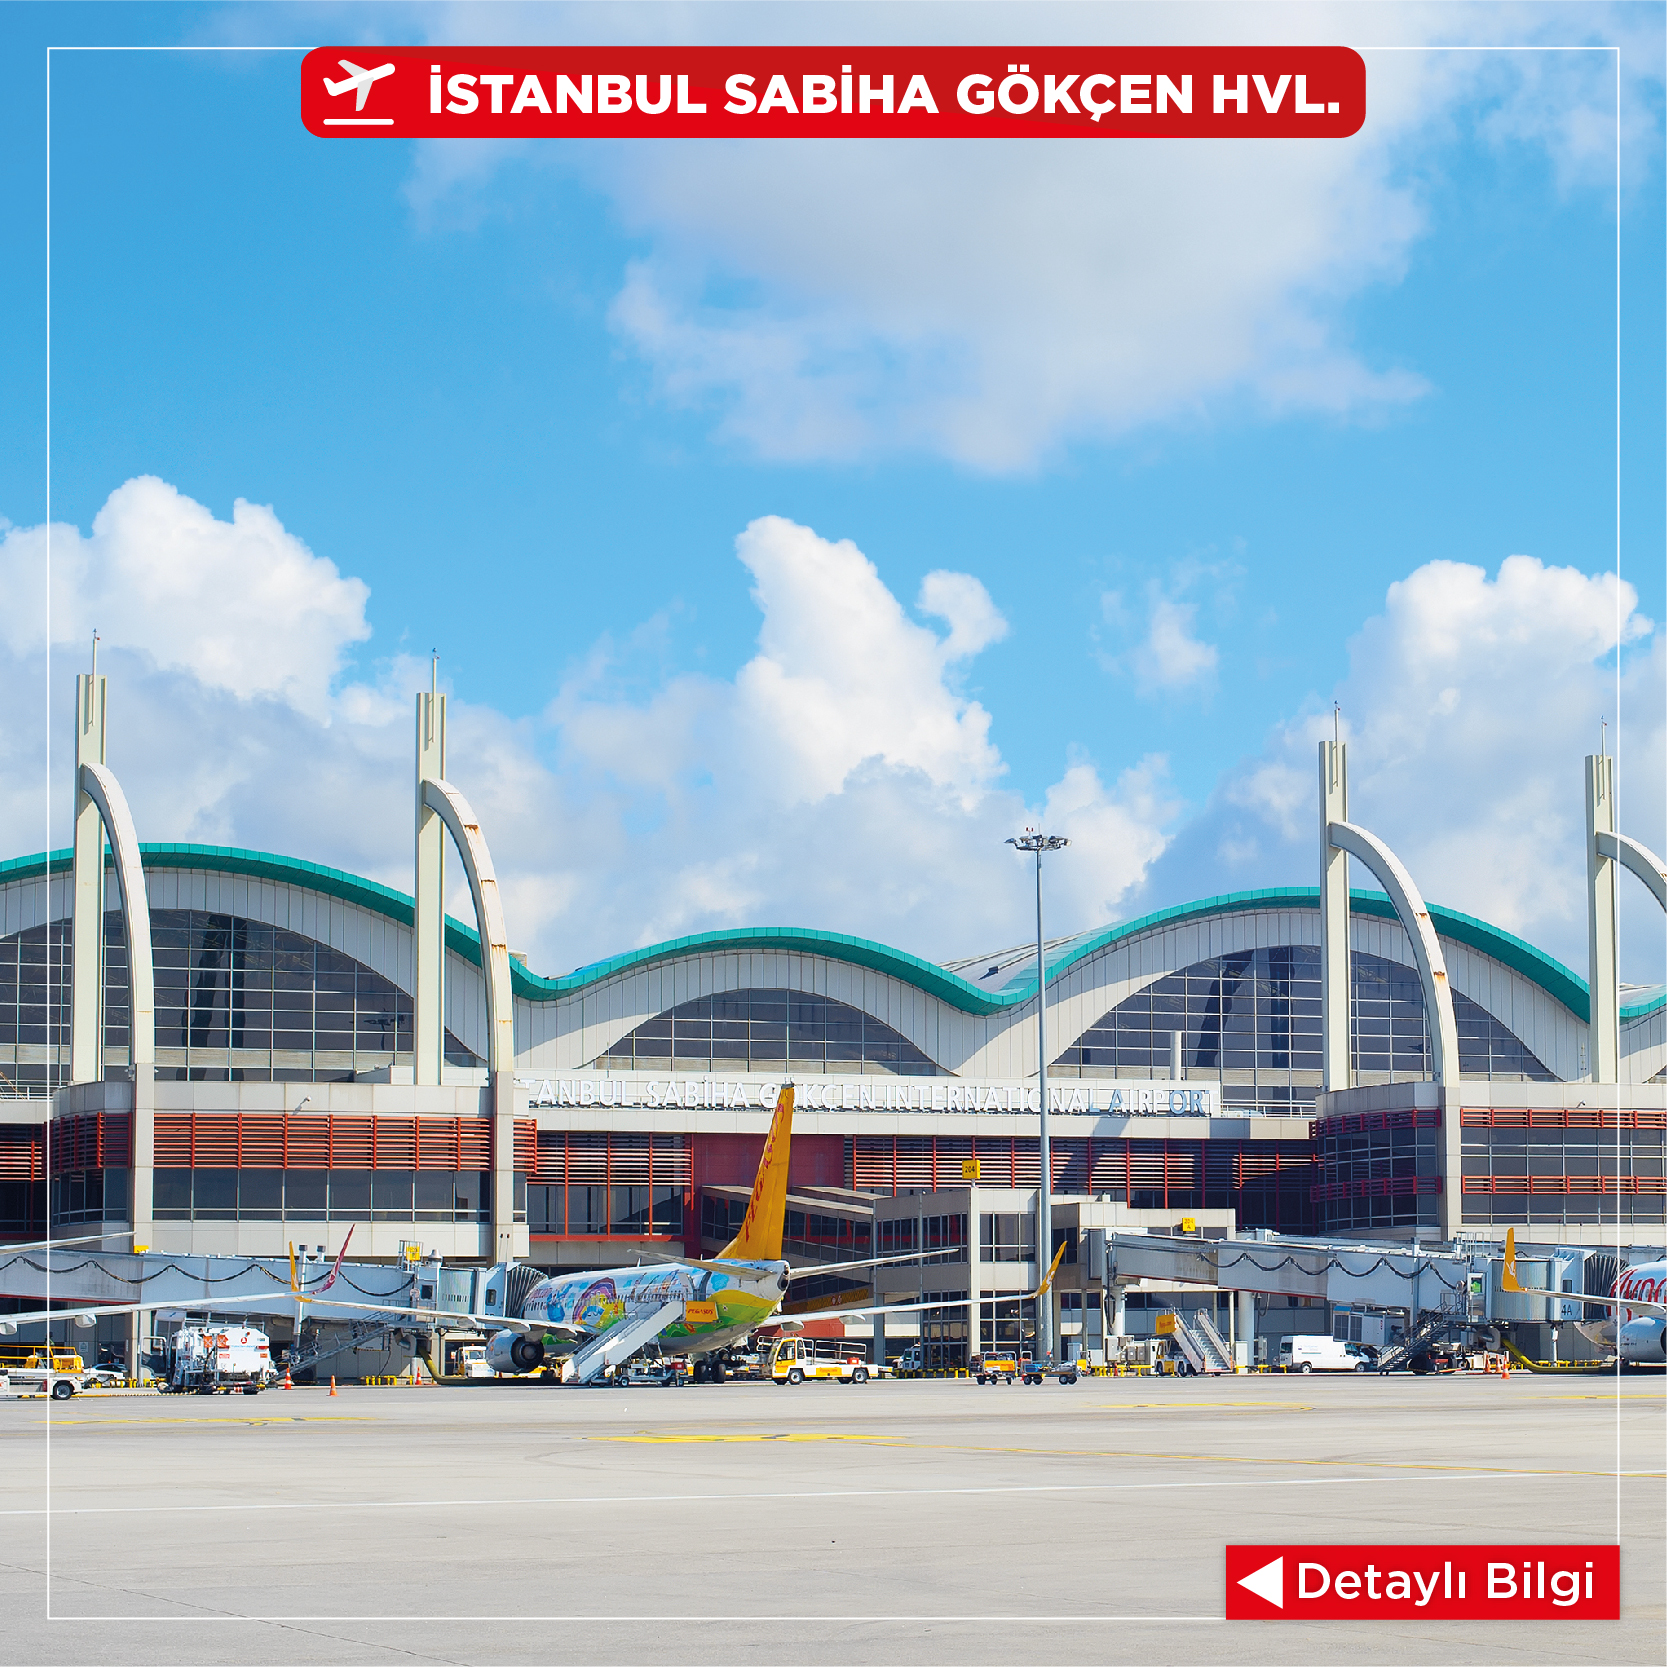 İstanbul Sabiha Gökçen Airport Car Rental